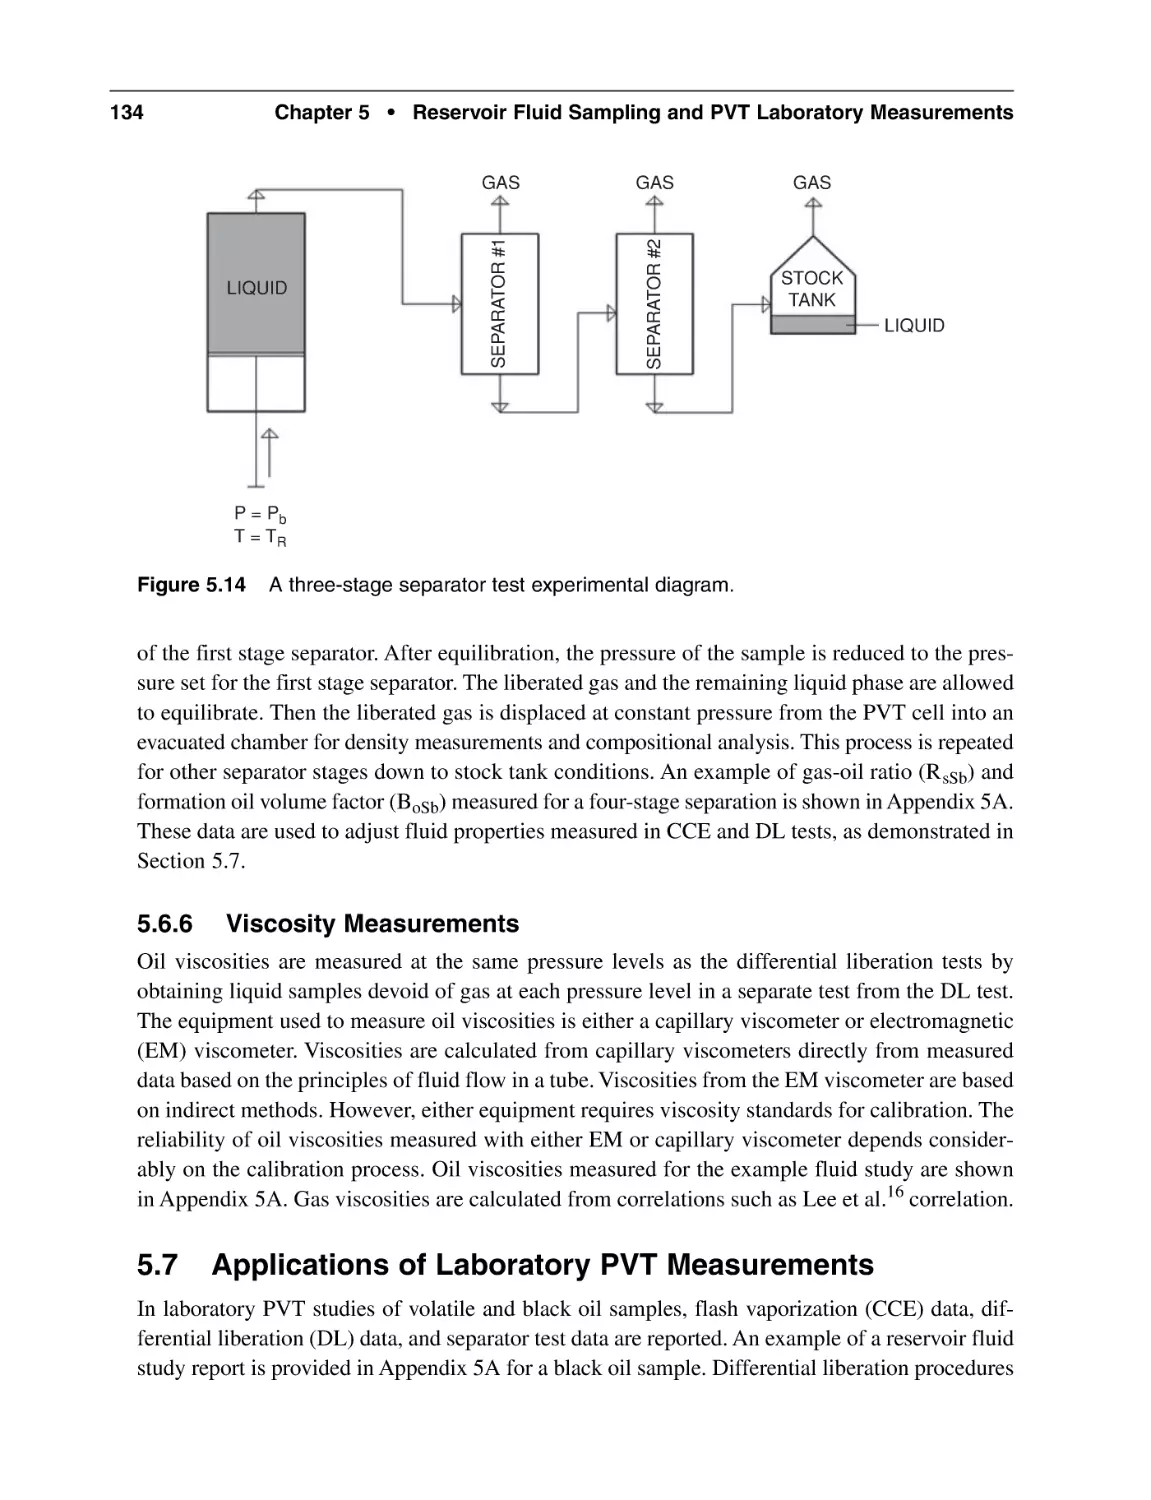 5.6.6 Viscosity Measurements
5.7 Applications of Laboratory PVT Measurements